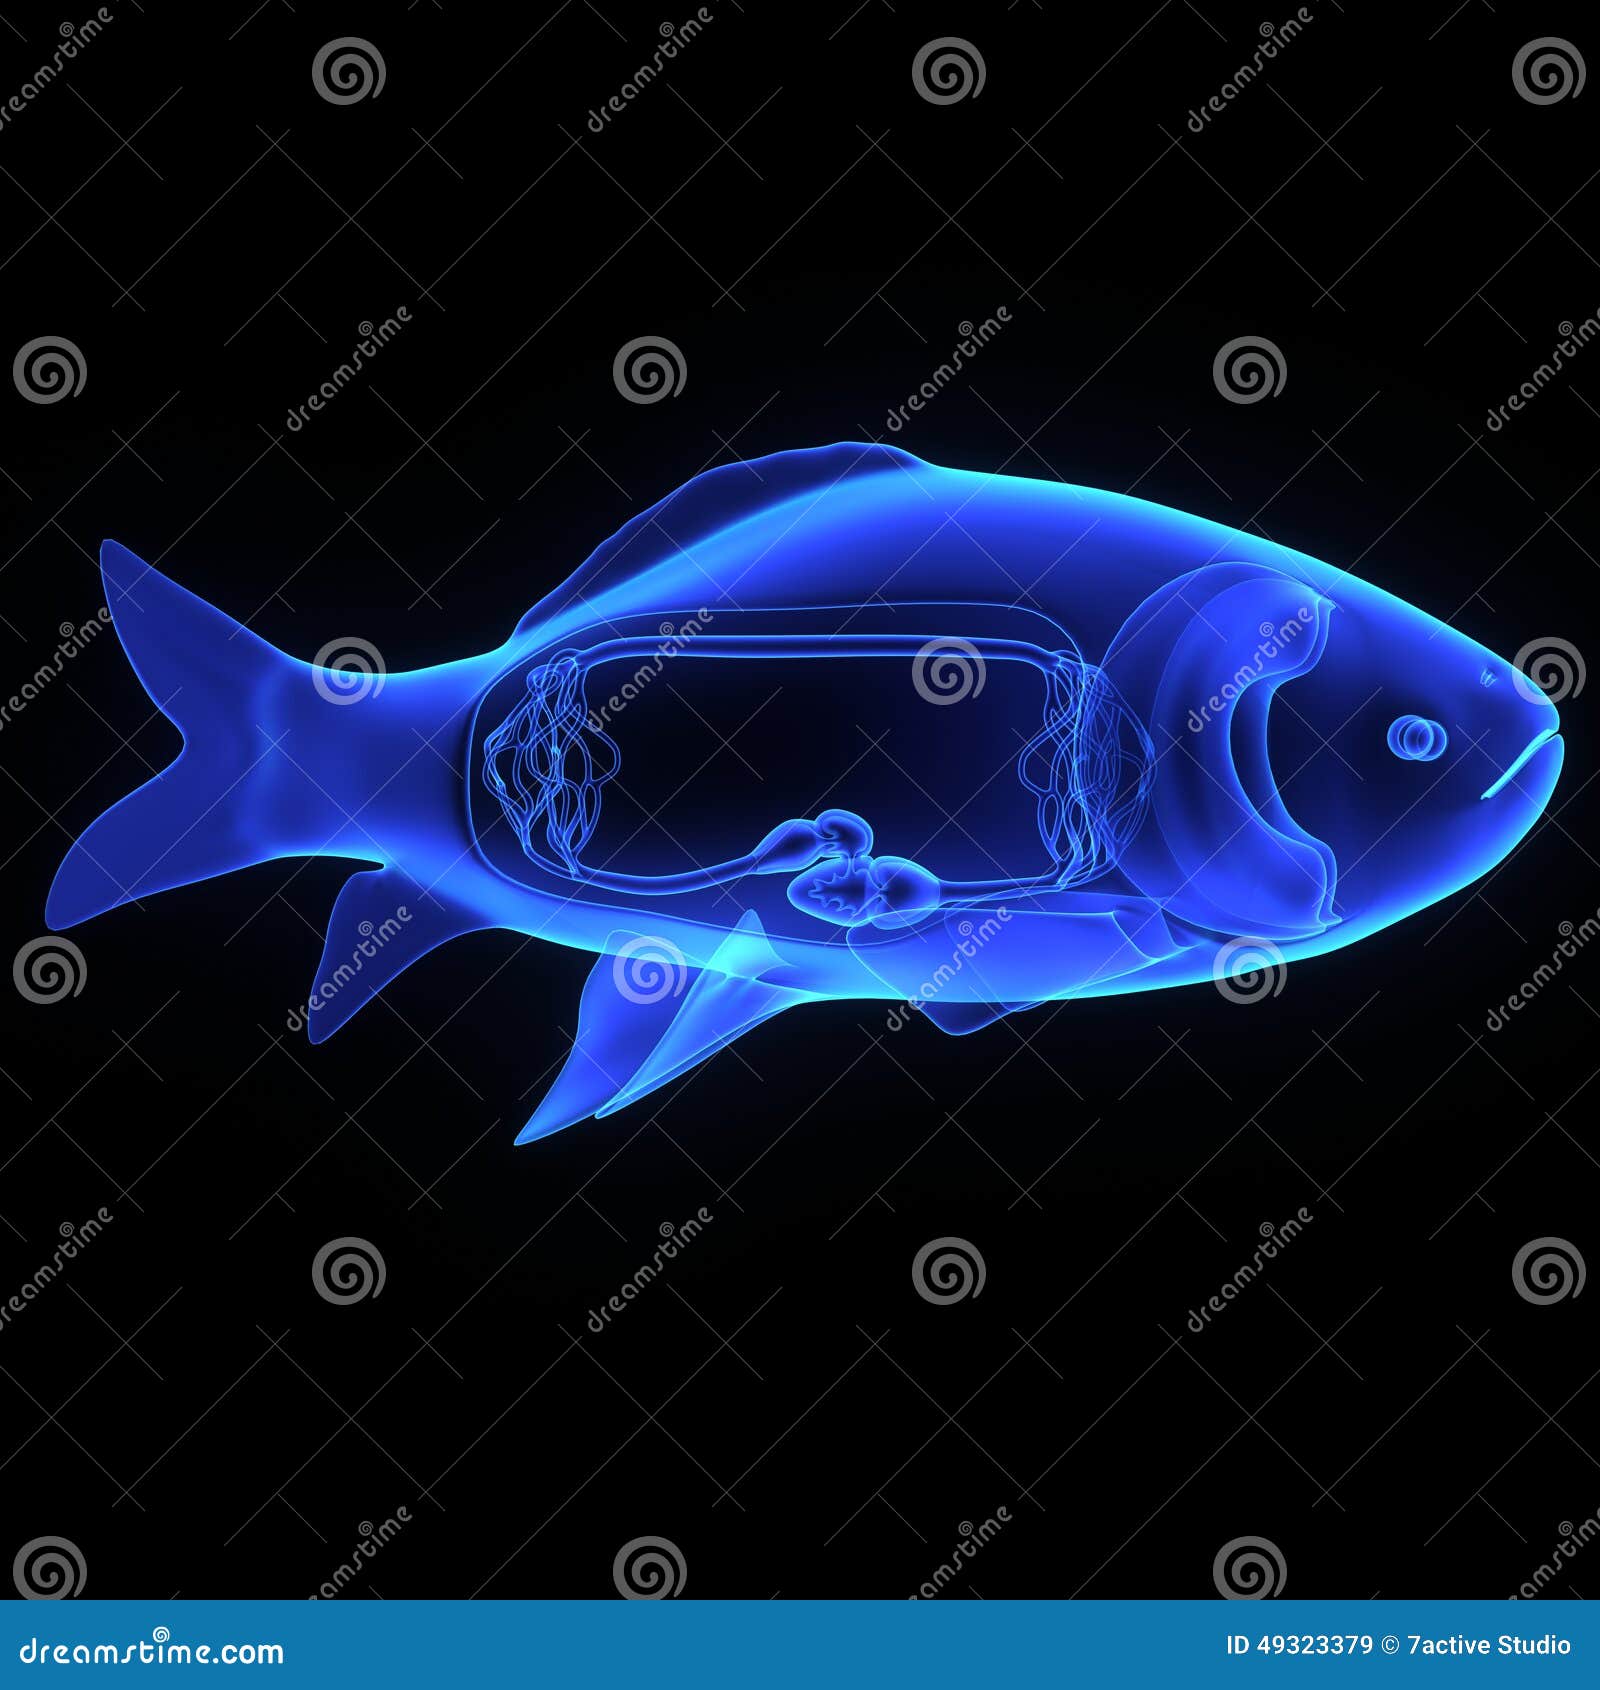 Fish circulatory system stock illustration. Illustration of freshwater